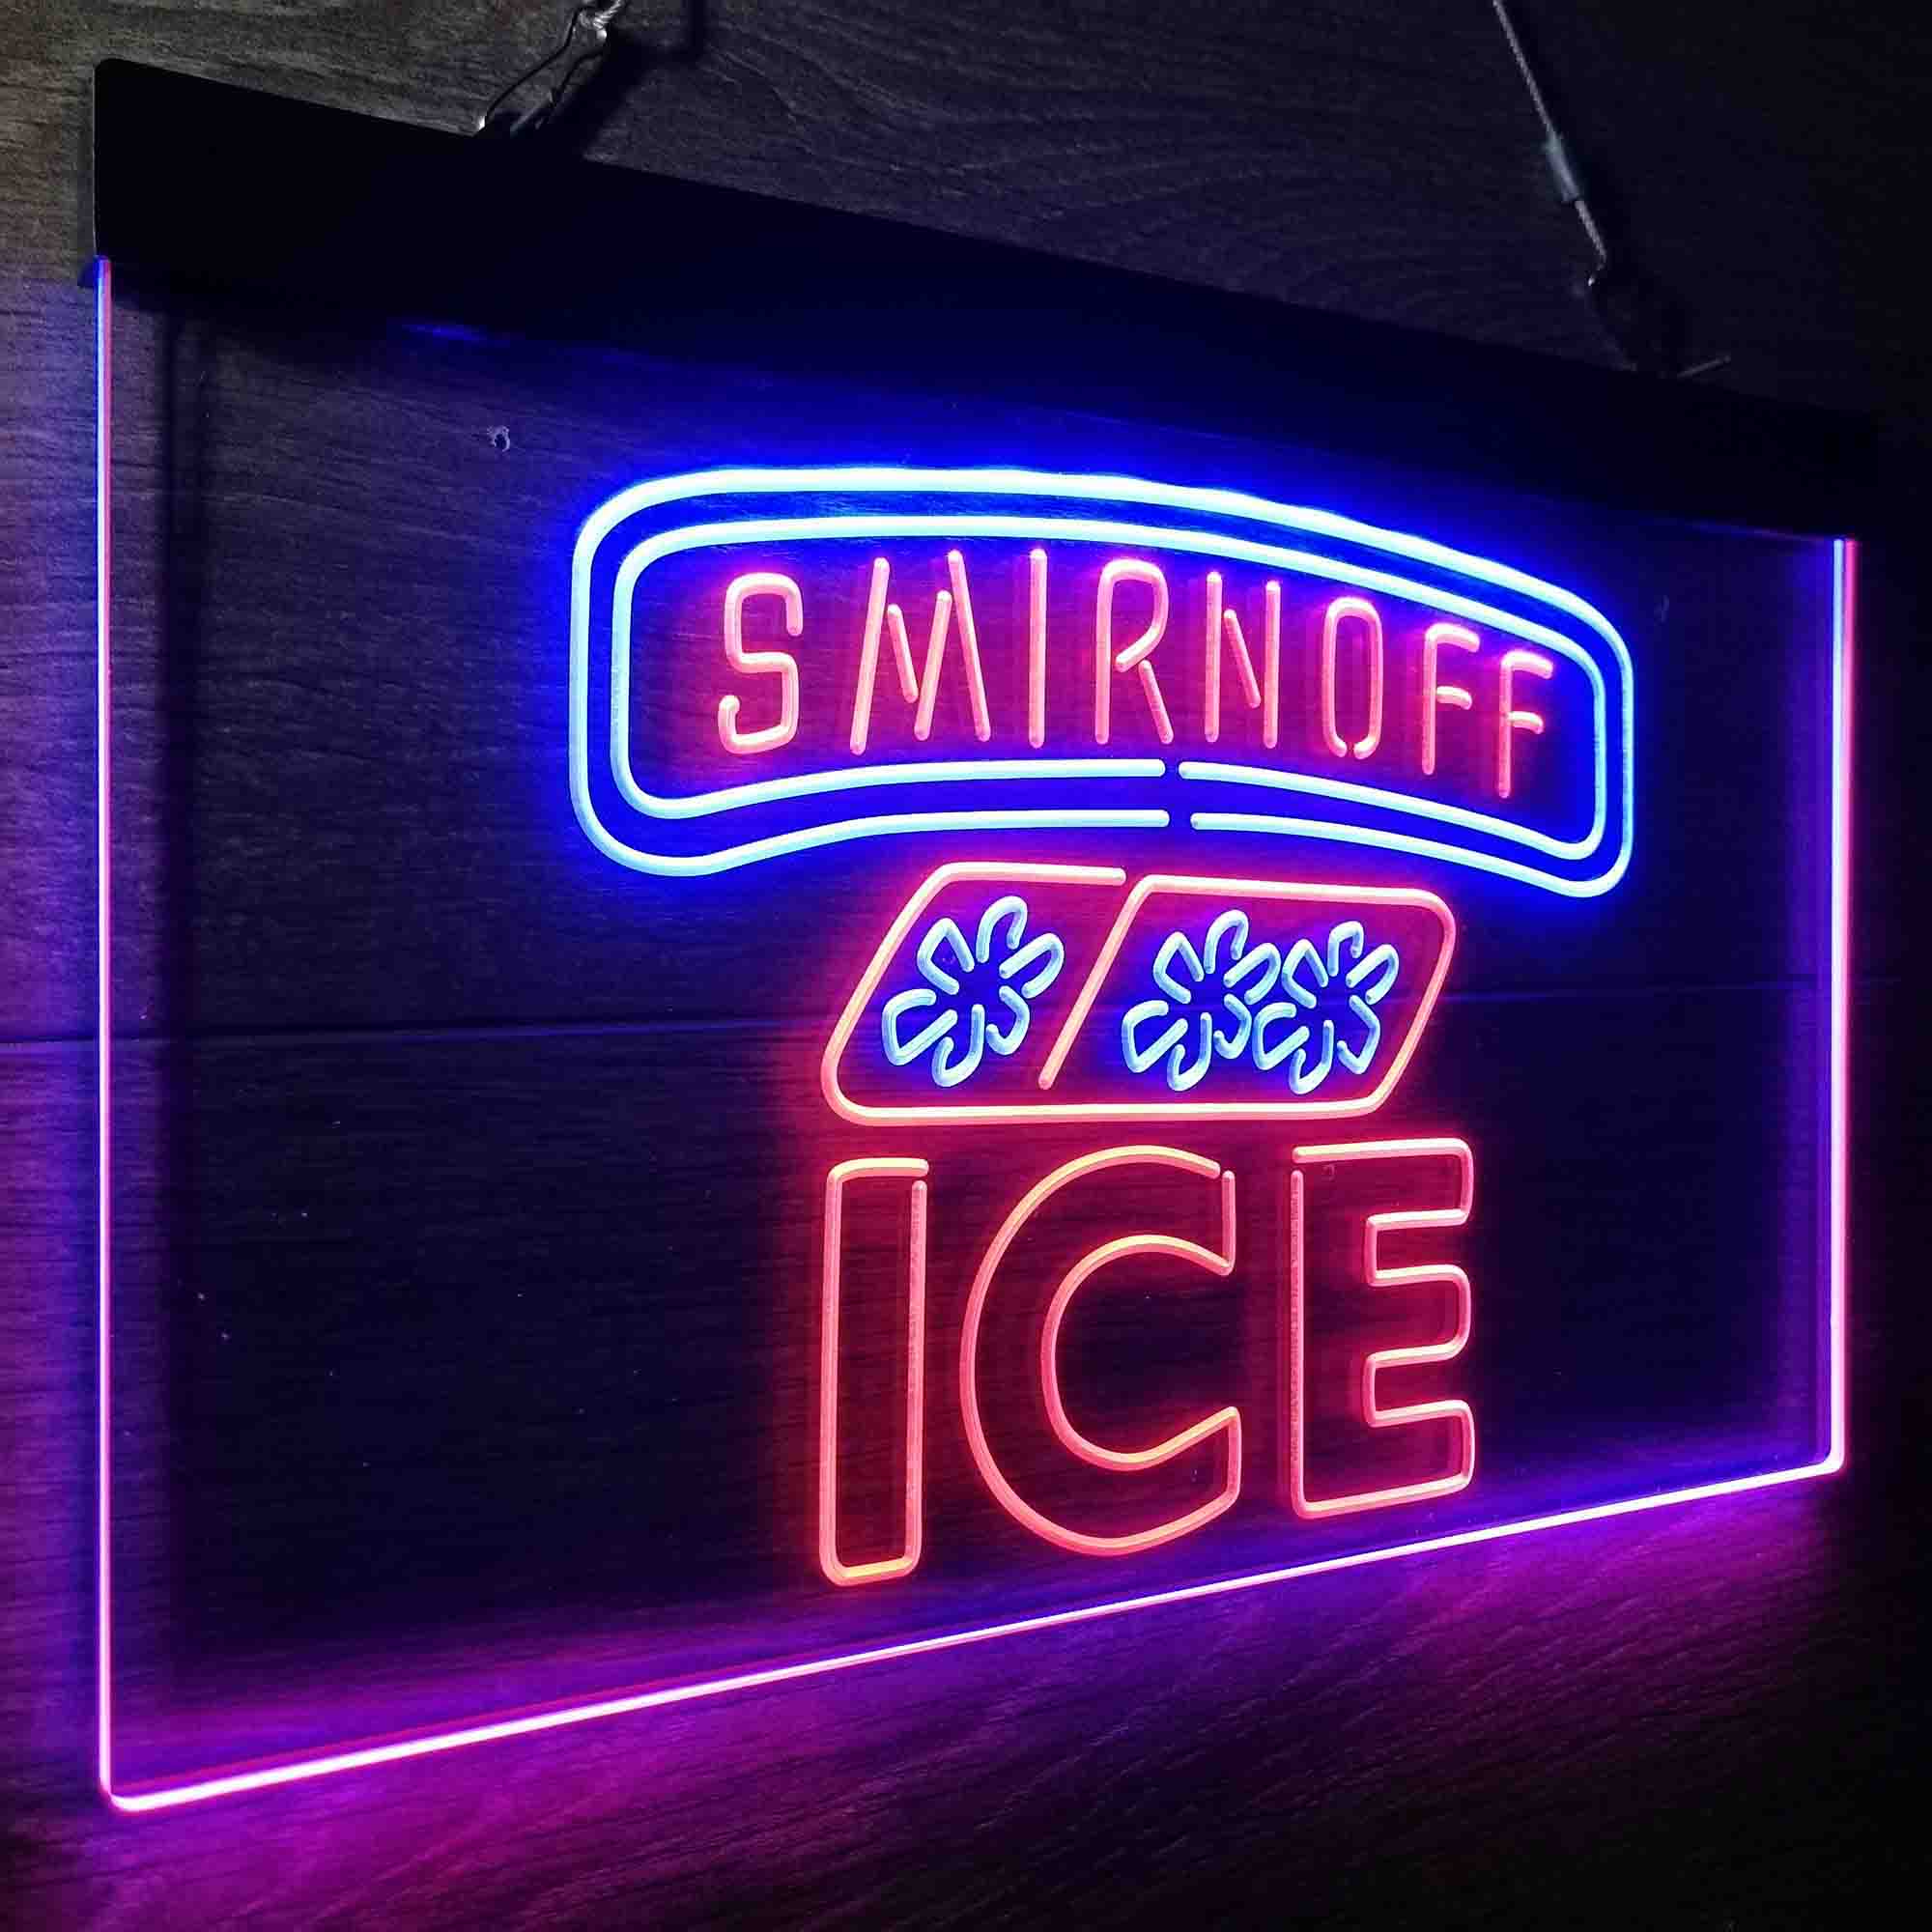 Smirnoff Ice Beverages Neon-Like LED Sign